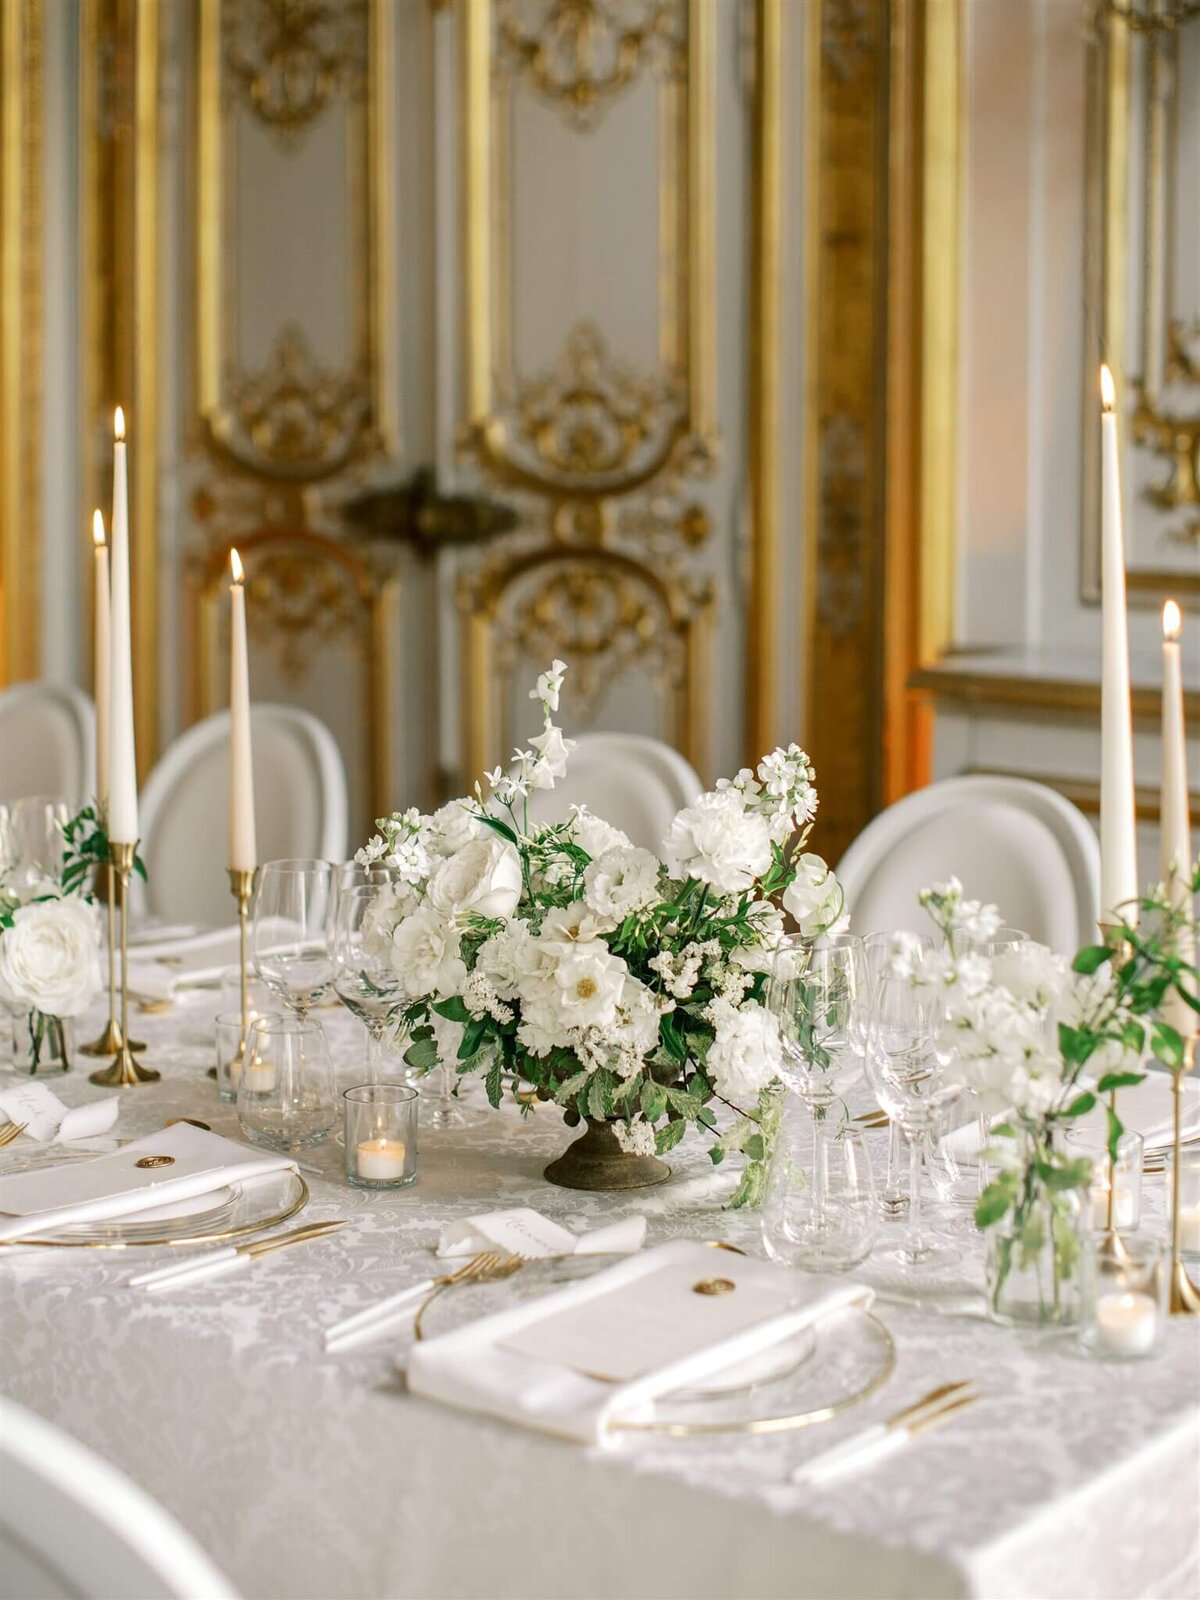 DianeSoteroPhotography_Wedding_StJamesHotel_HotelLeMarois_Paris_France_433